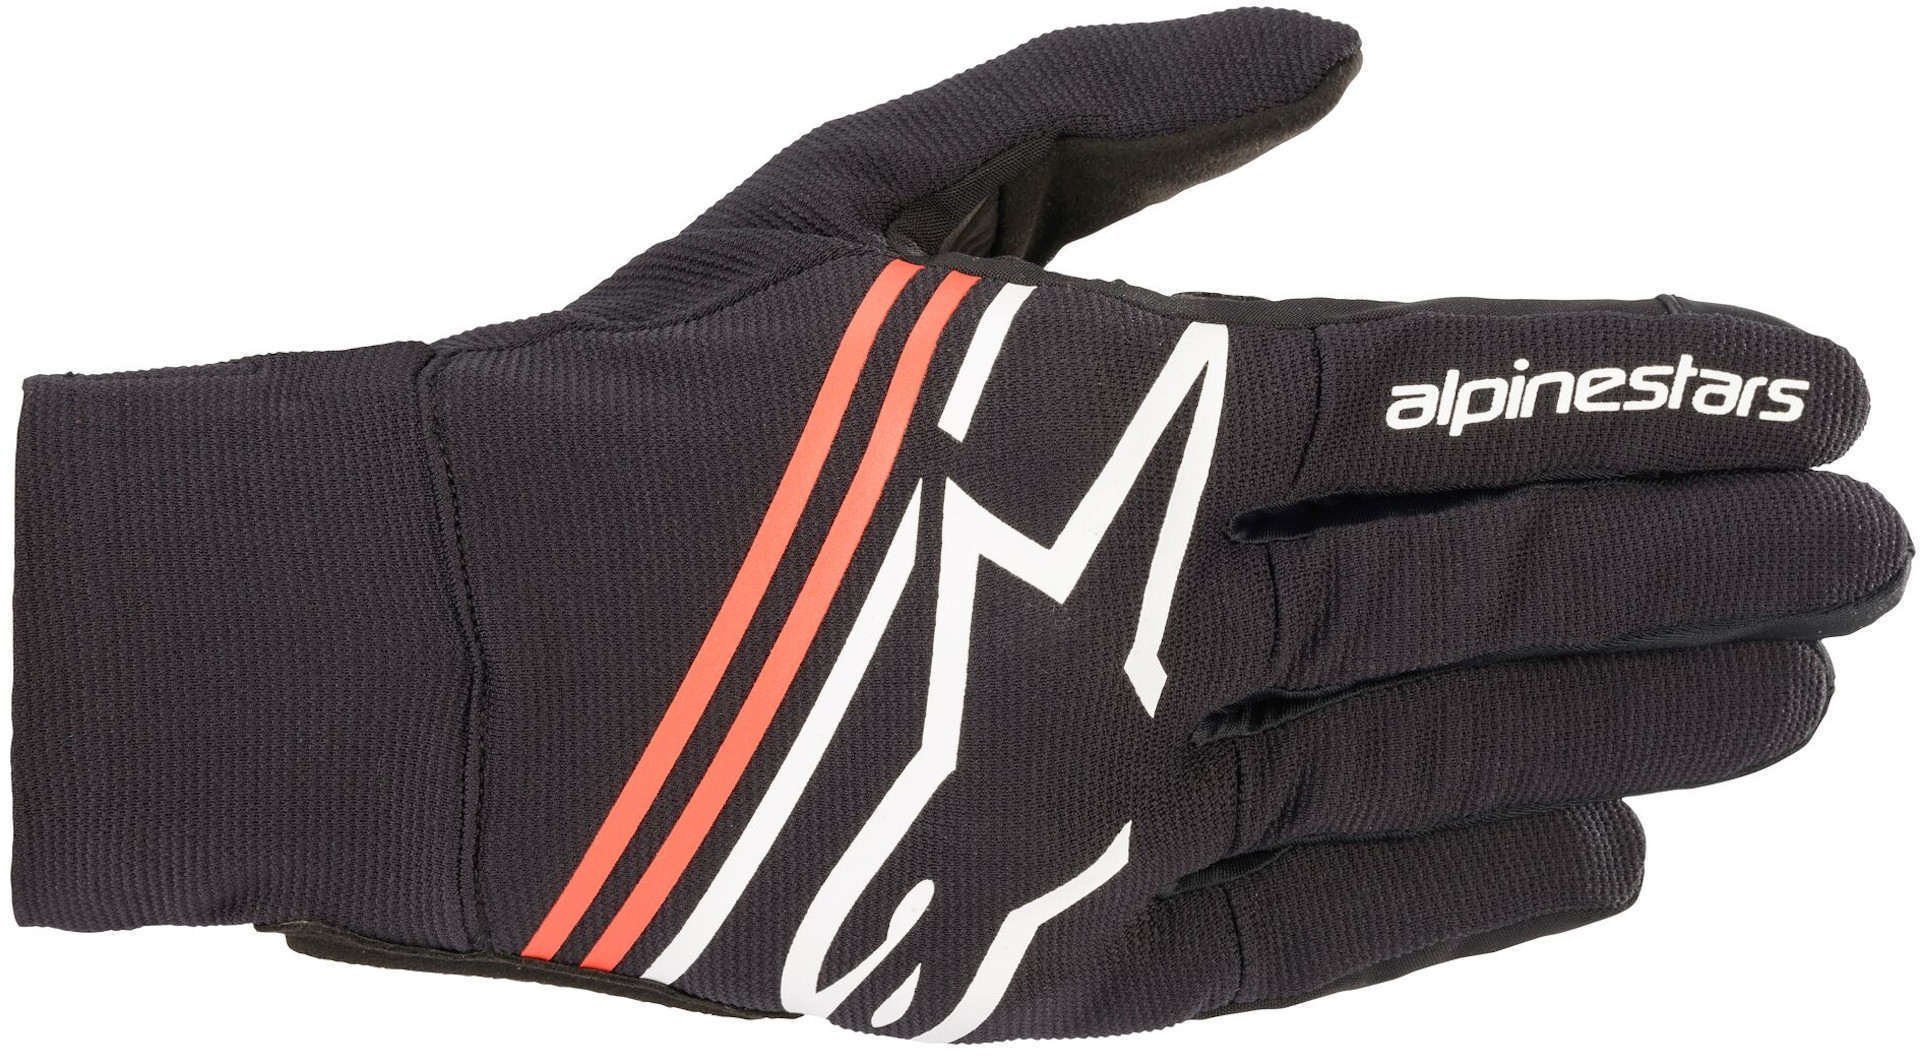 Alpinestars Motorradhandschuhe Reef Handschuhe Black/White/Red Motorrad